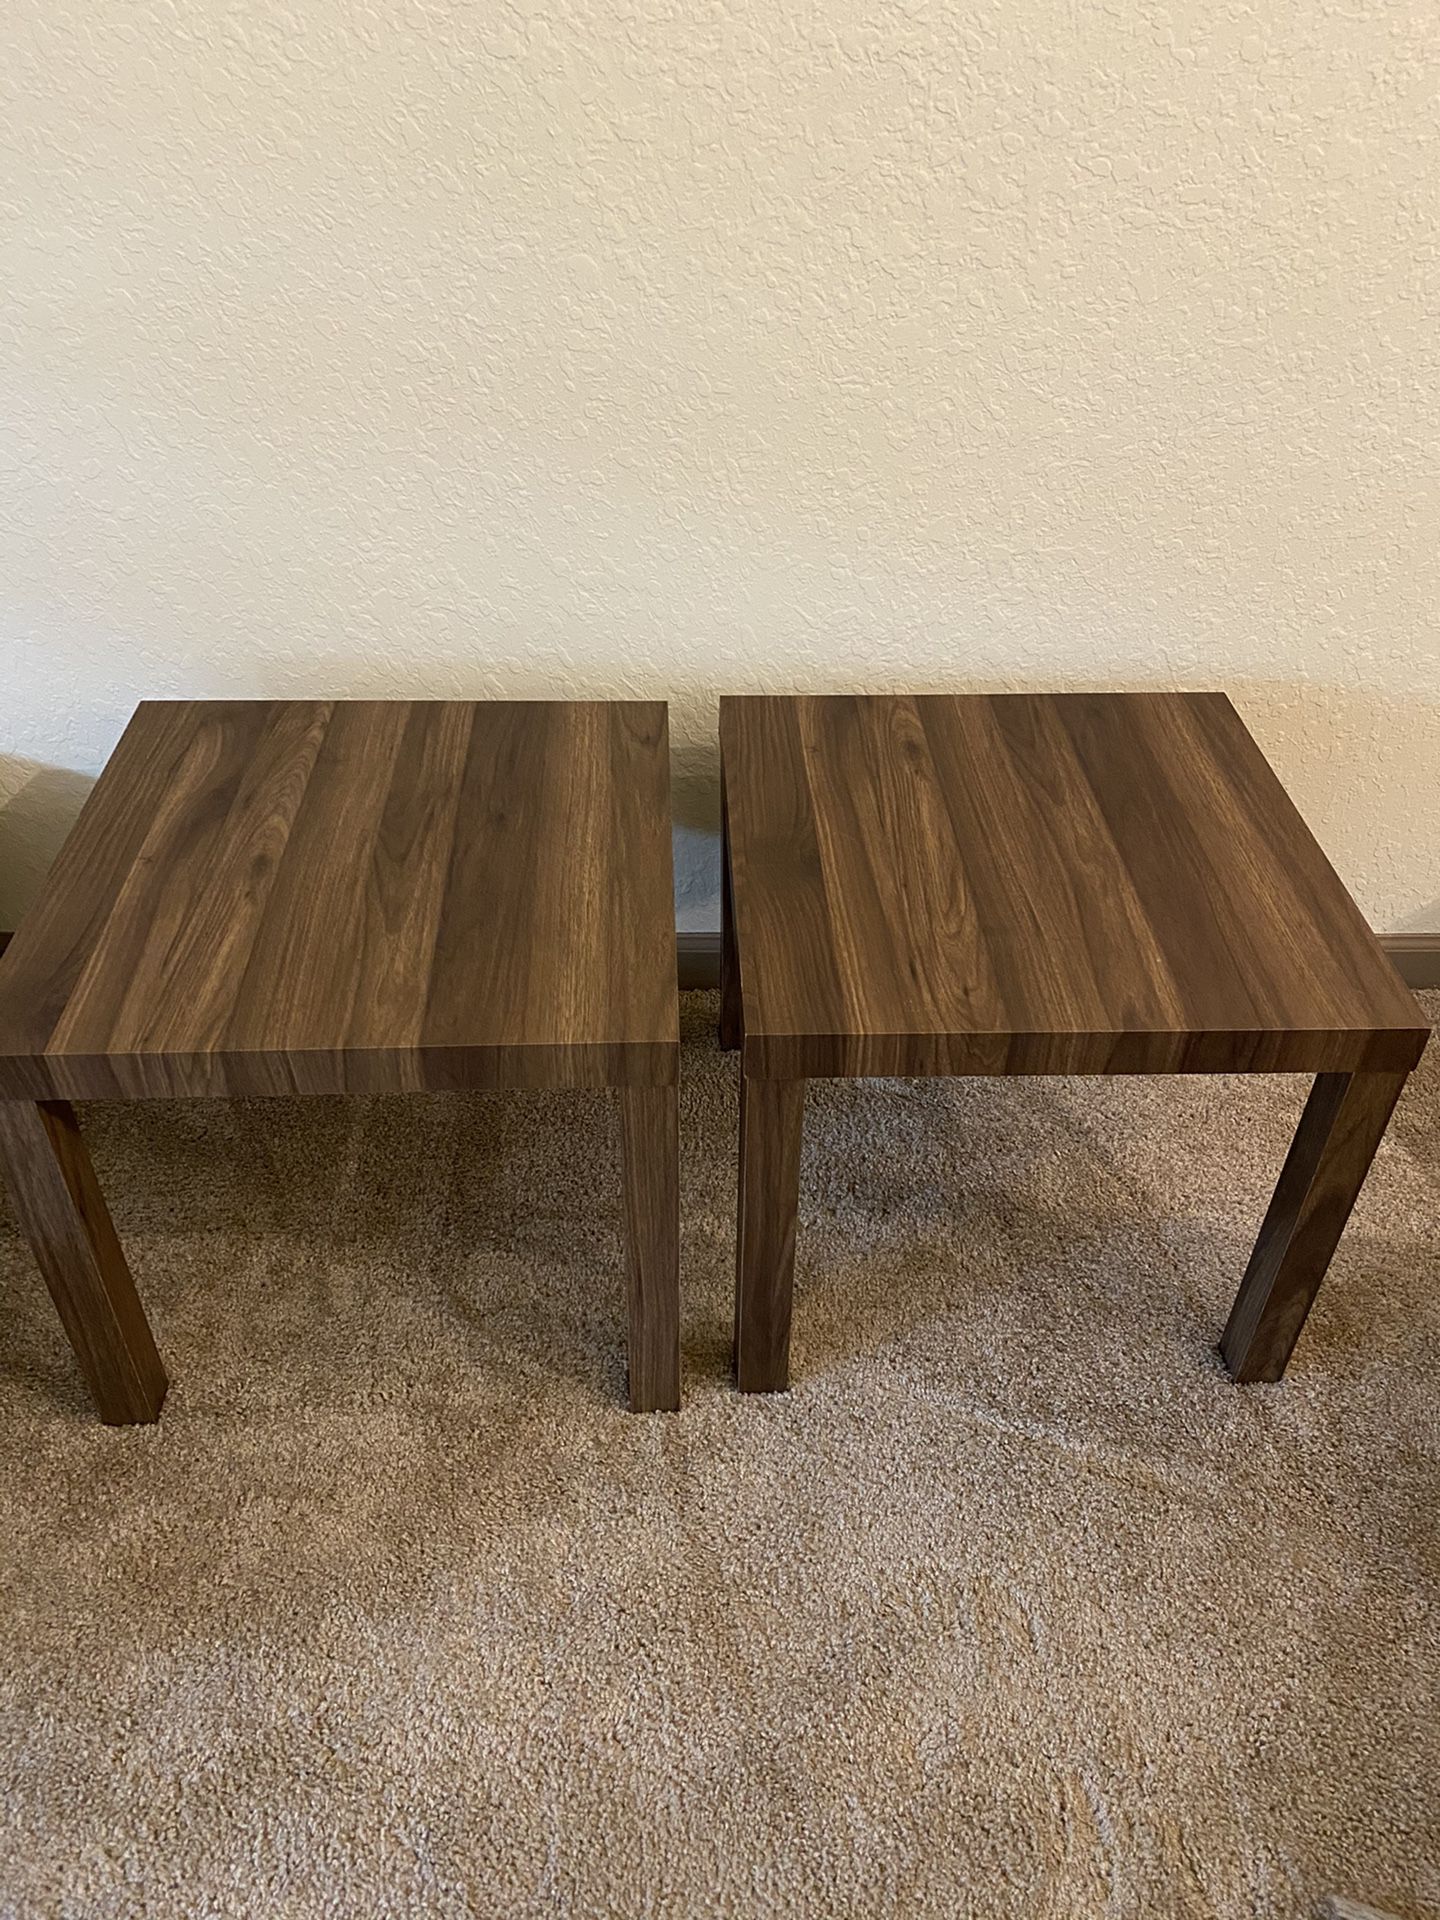 Set of side tables